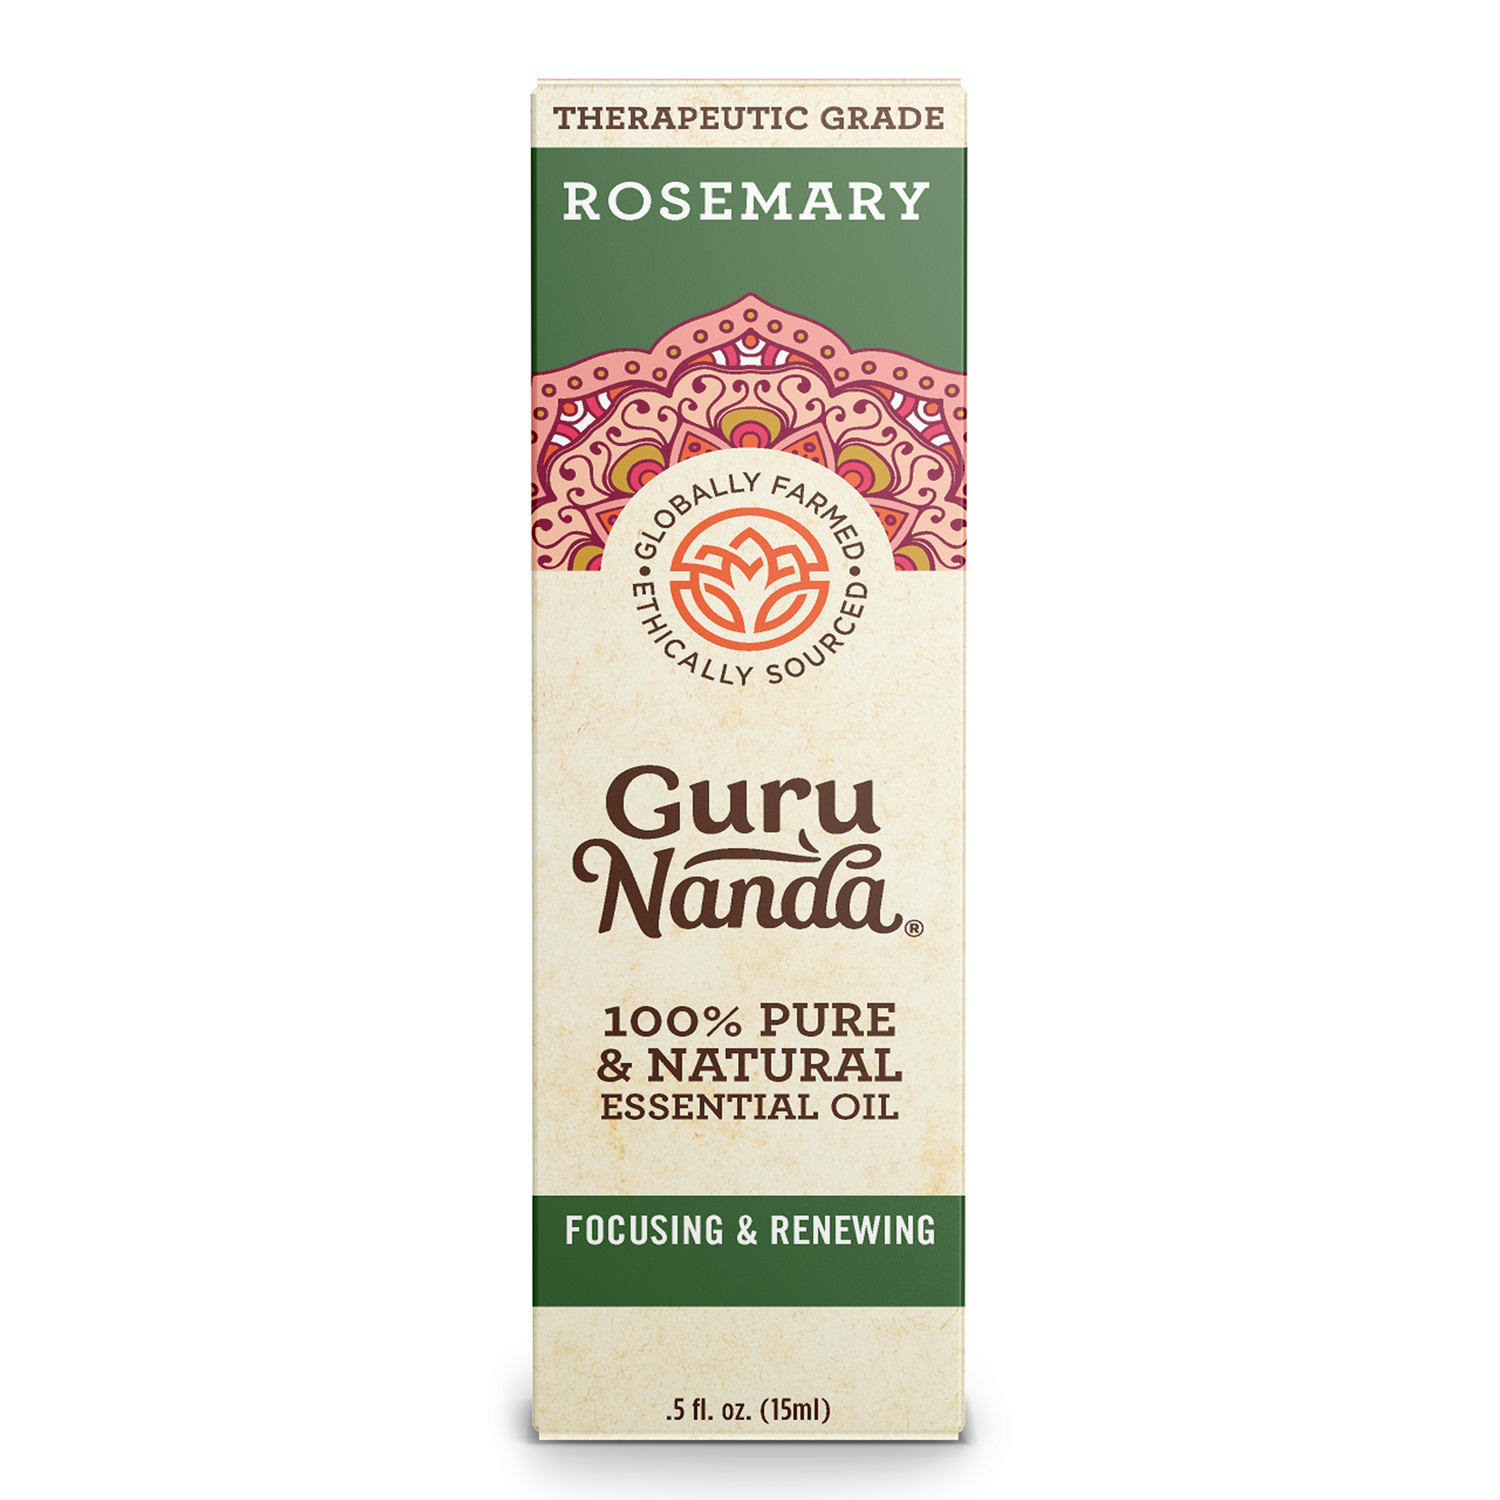 Guru Nanda Rosemary Essential Oil 100% Pure and Natural 0.5 fl. oz. - image 2 of 5